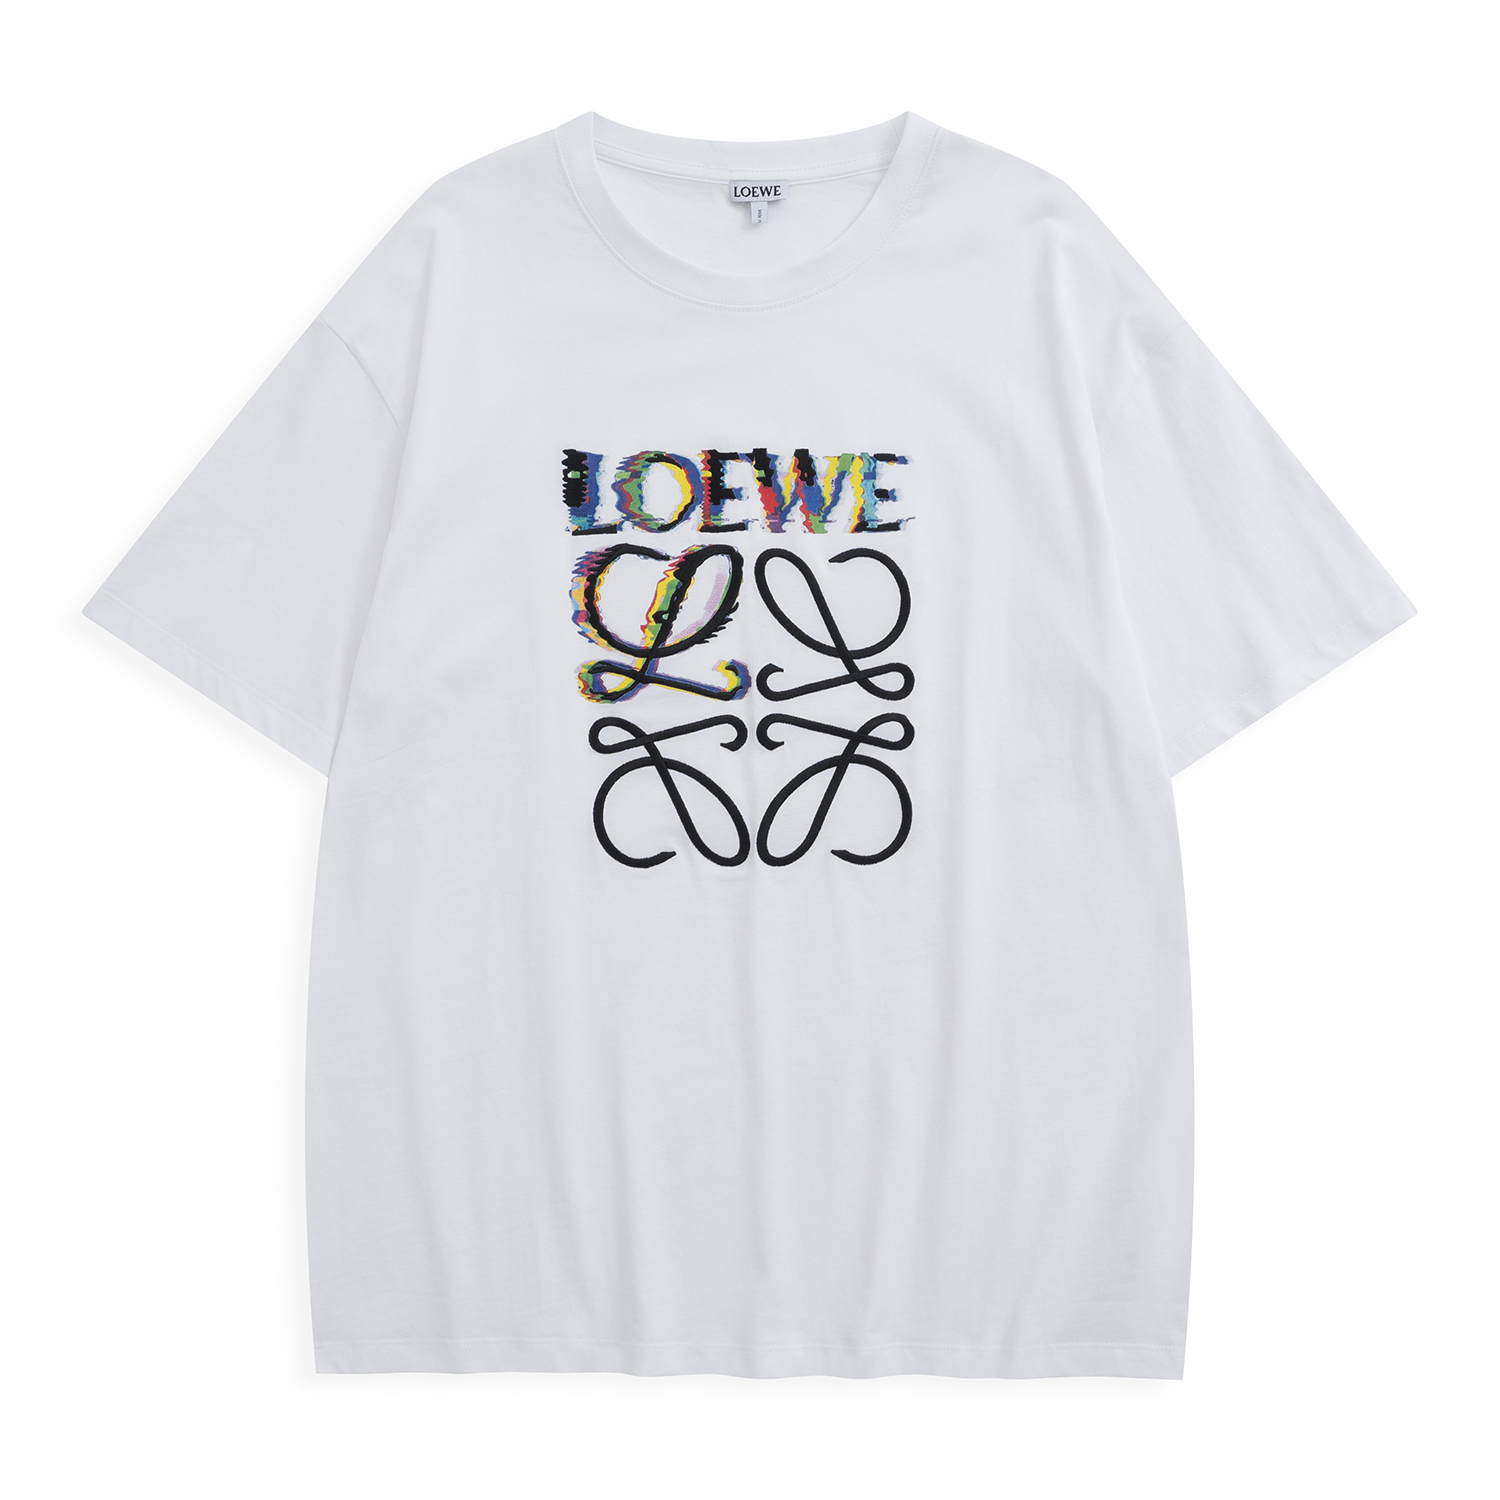 Loewe Clothing T-Shirt Black White Embroidery Cotton Foam Spandex Short Sleeve